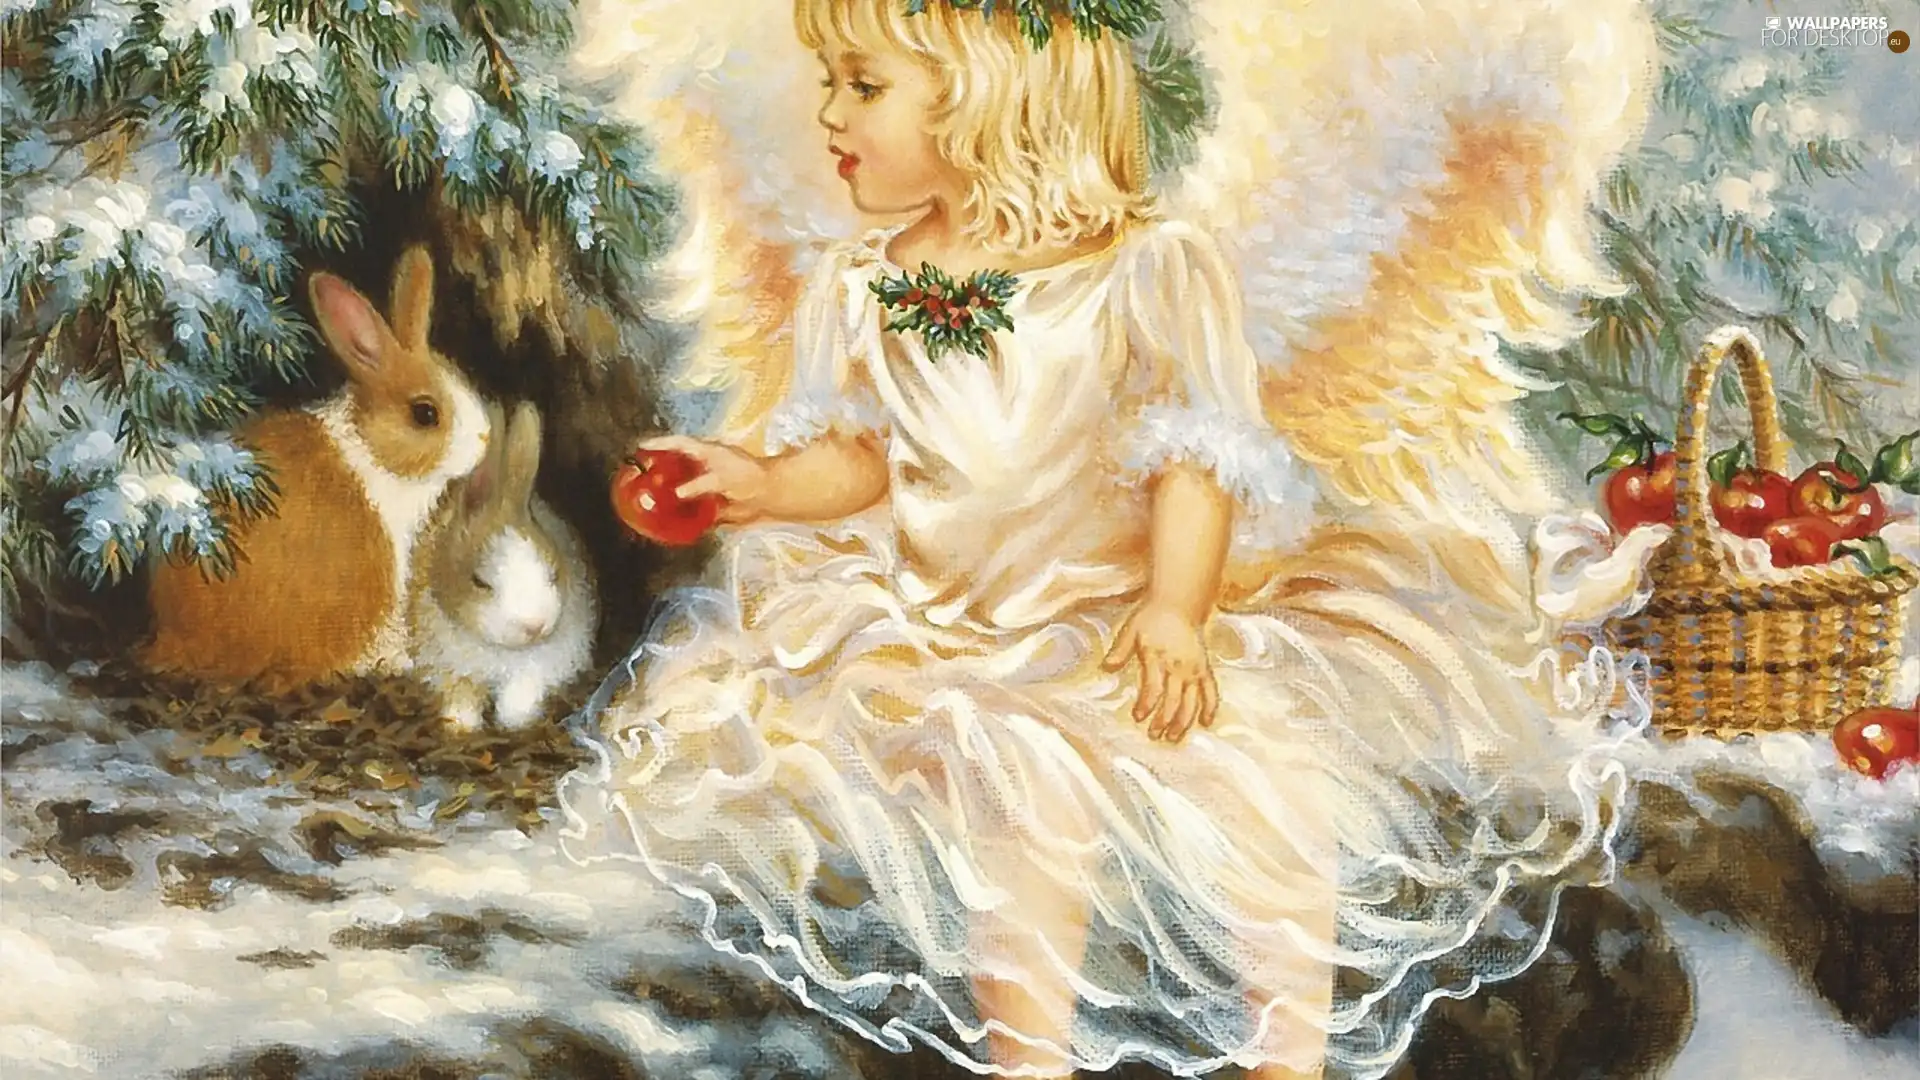 apples, Dona Gelsinger, angel, rabbits, small